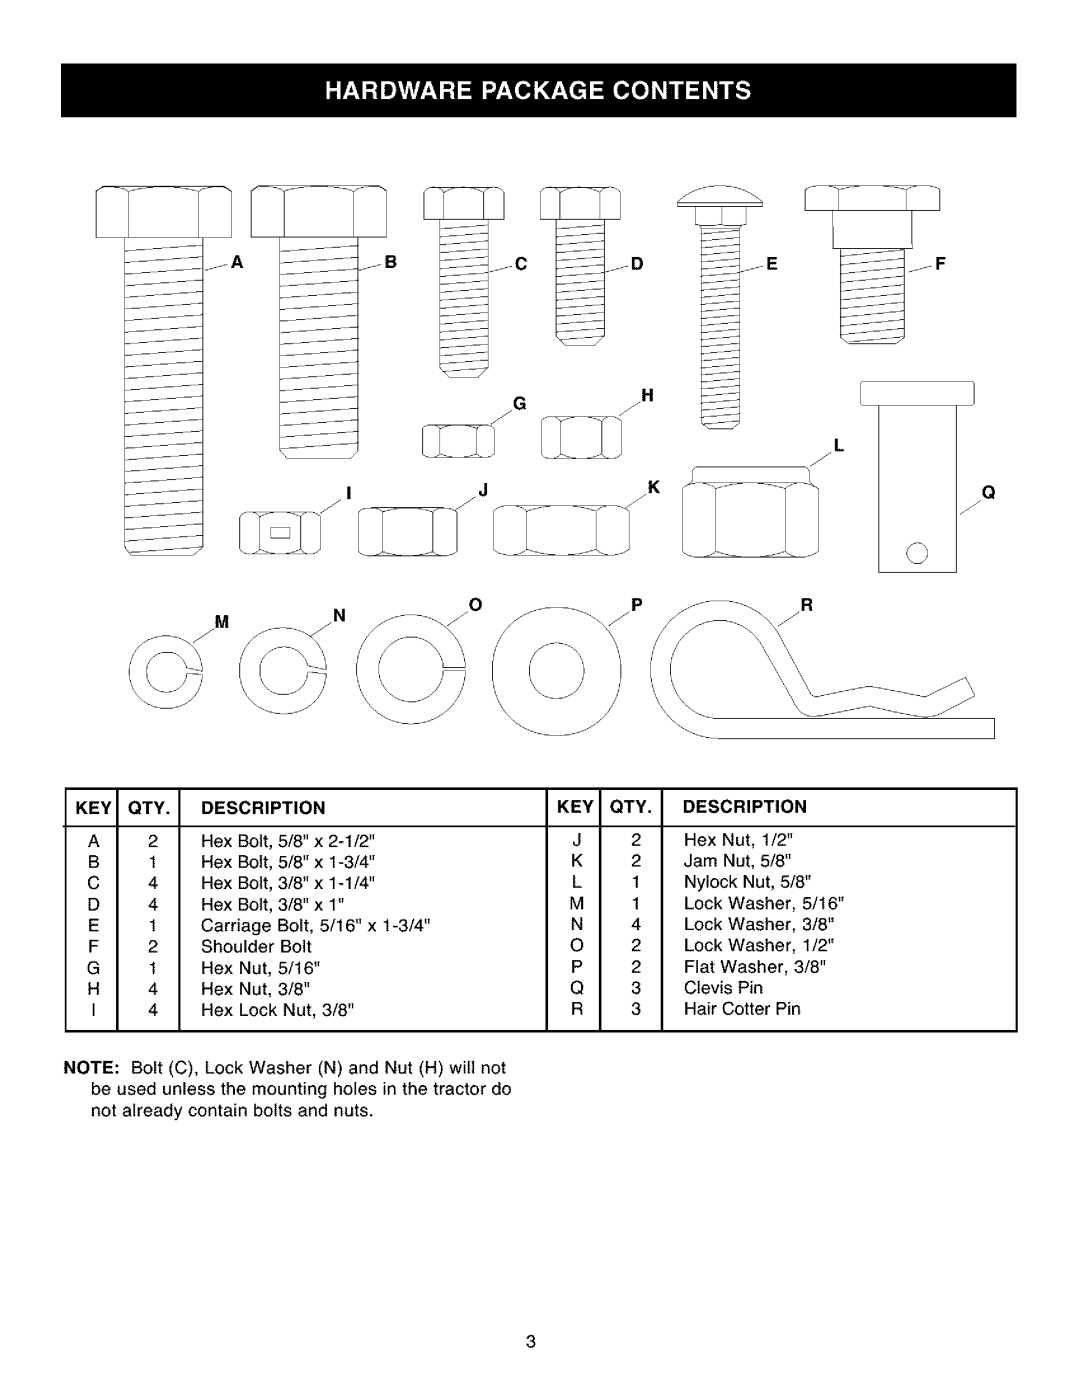 Craftsman 486.24535 owner manual Key Qty. Description 